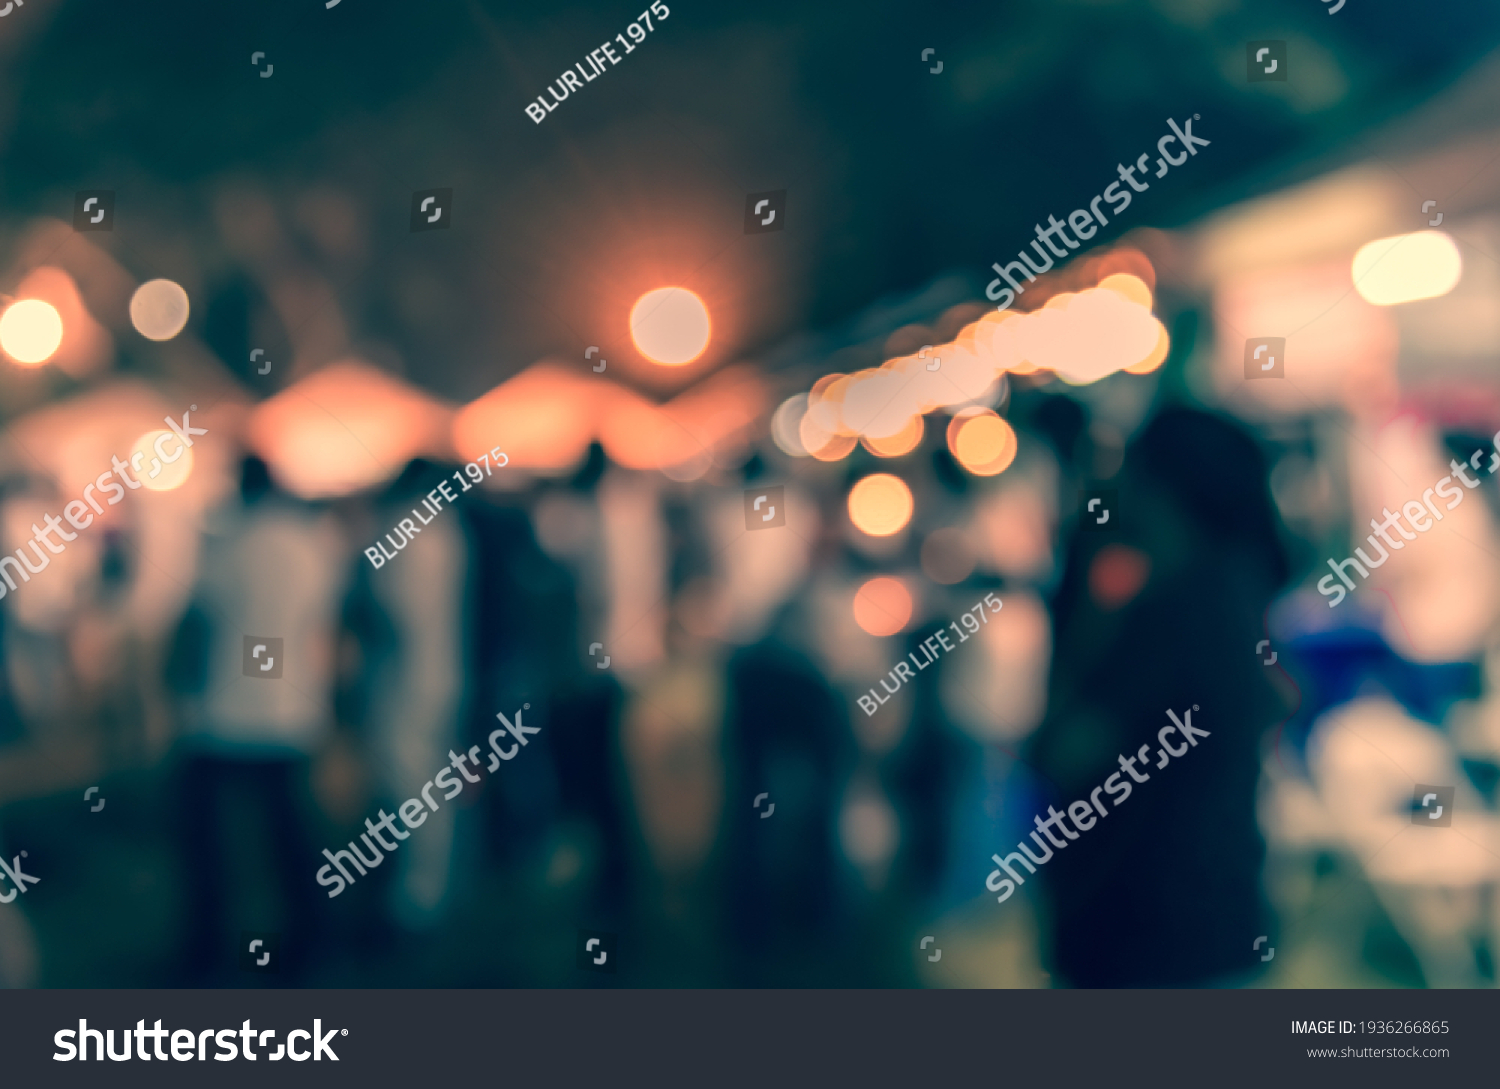 8,684,353 Light blur Images, Stock Photos & Vectors | Shutterstock